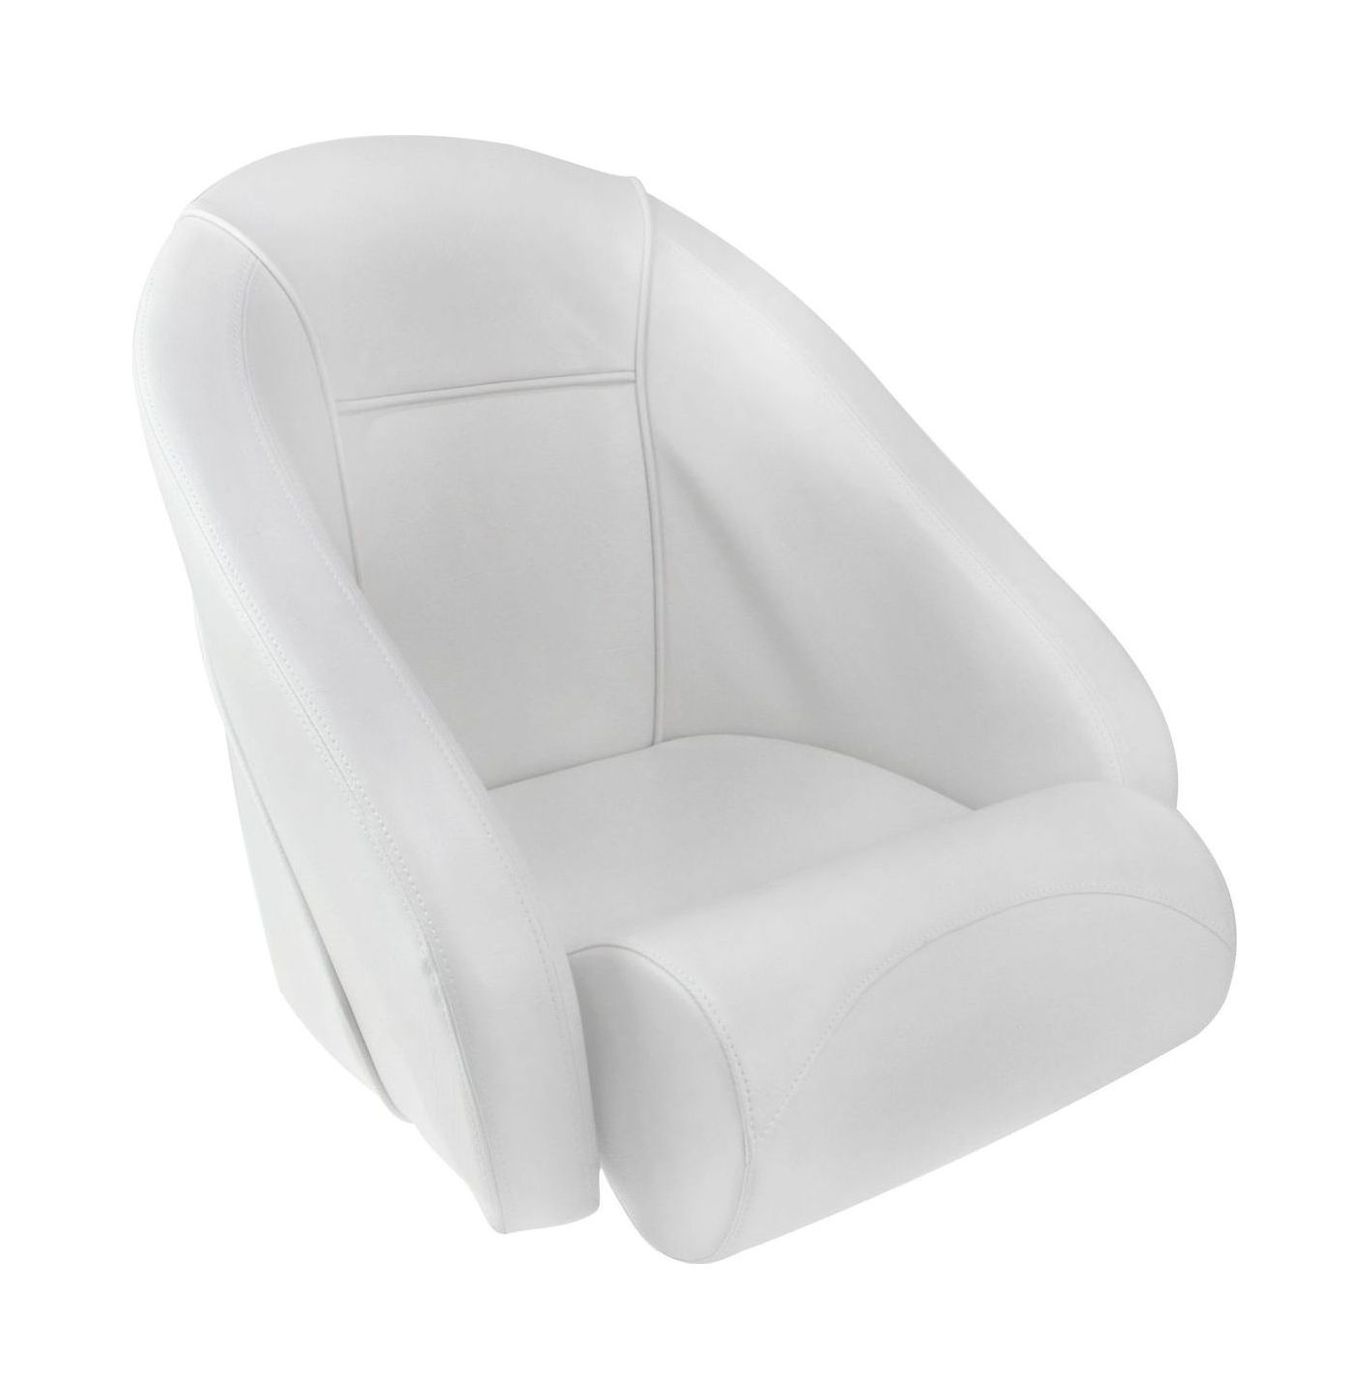 Кресло ROMEO мягкое, подставка, обивка белый винил 118100010 кресло romeo мягкое подставка обивка белый винил 118100010